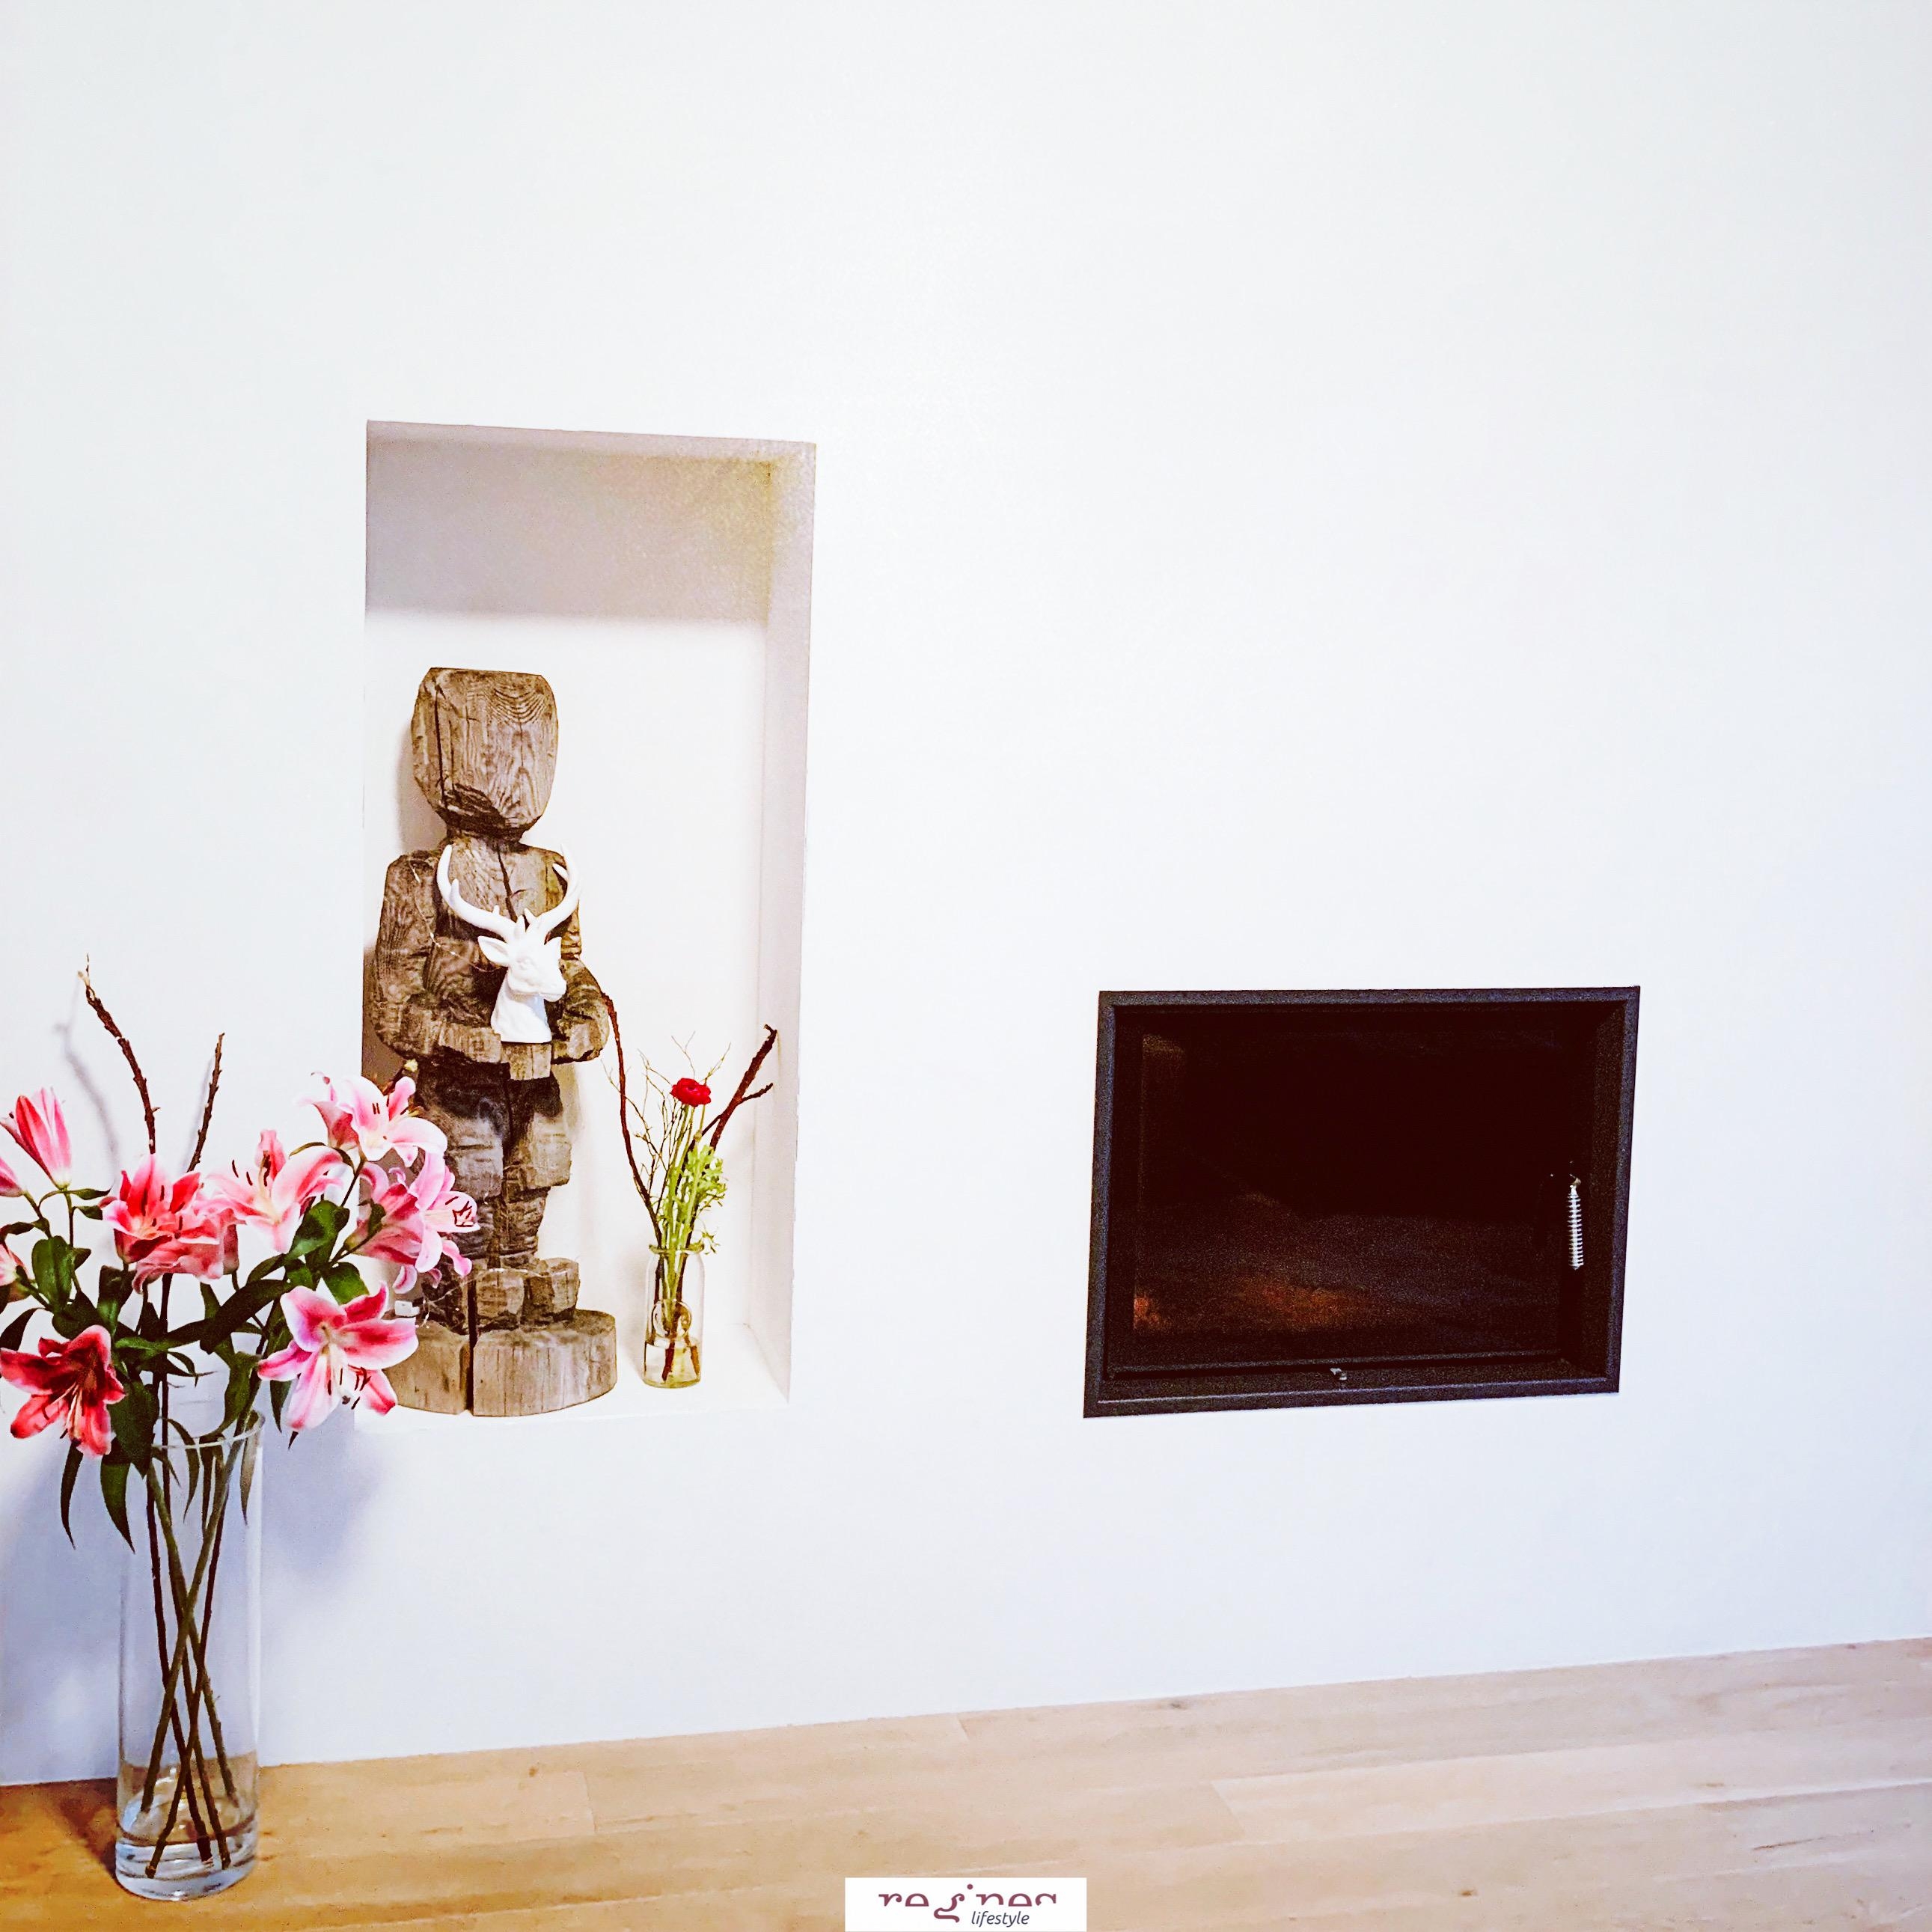 Lilienliebe ...

#lieblingsblumen #wohnen #scandinaviandesign #freshflowers #lilien #ranunkel #pink #livingroom 